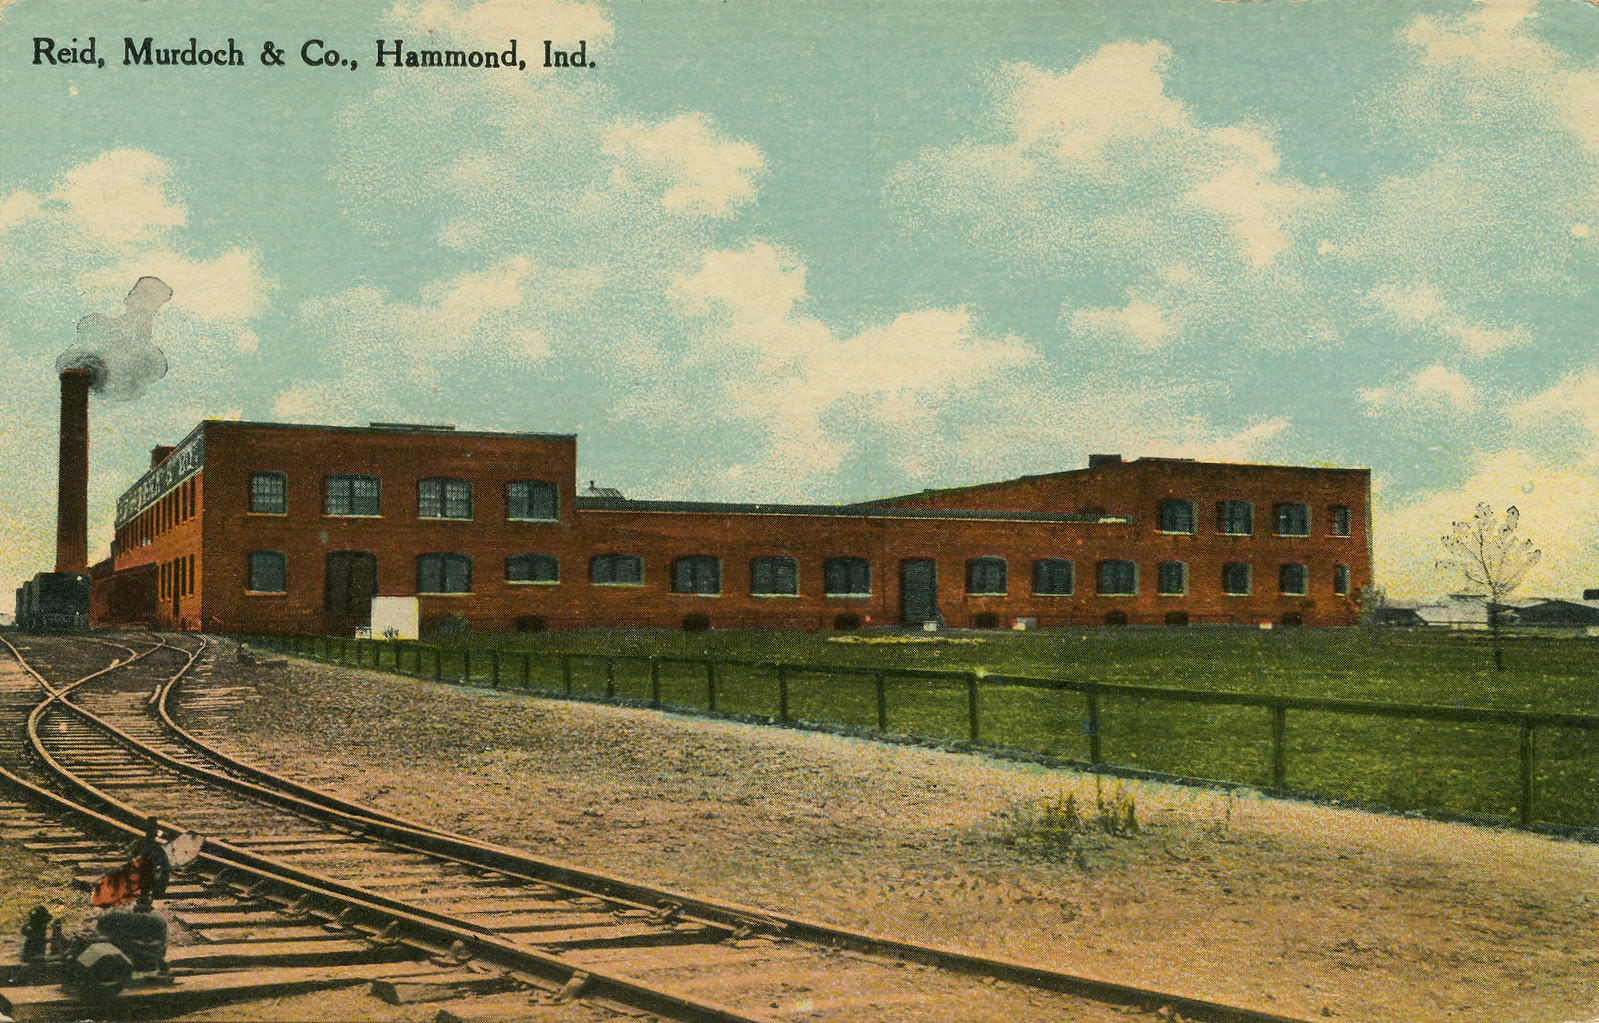 Reid, Murdoch and Company, 1910 - Hammond, Indiana